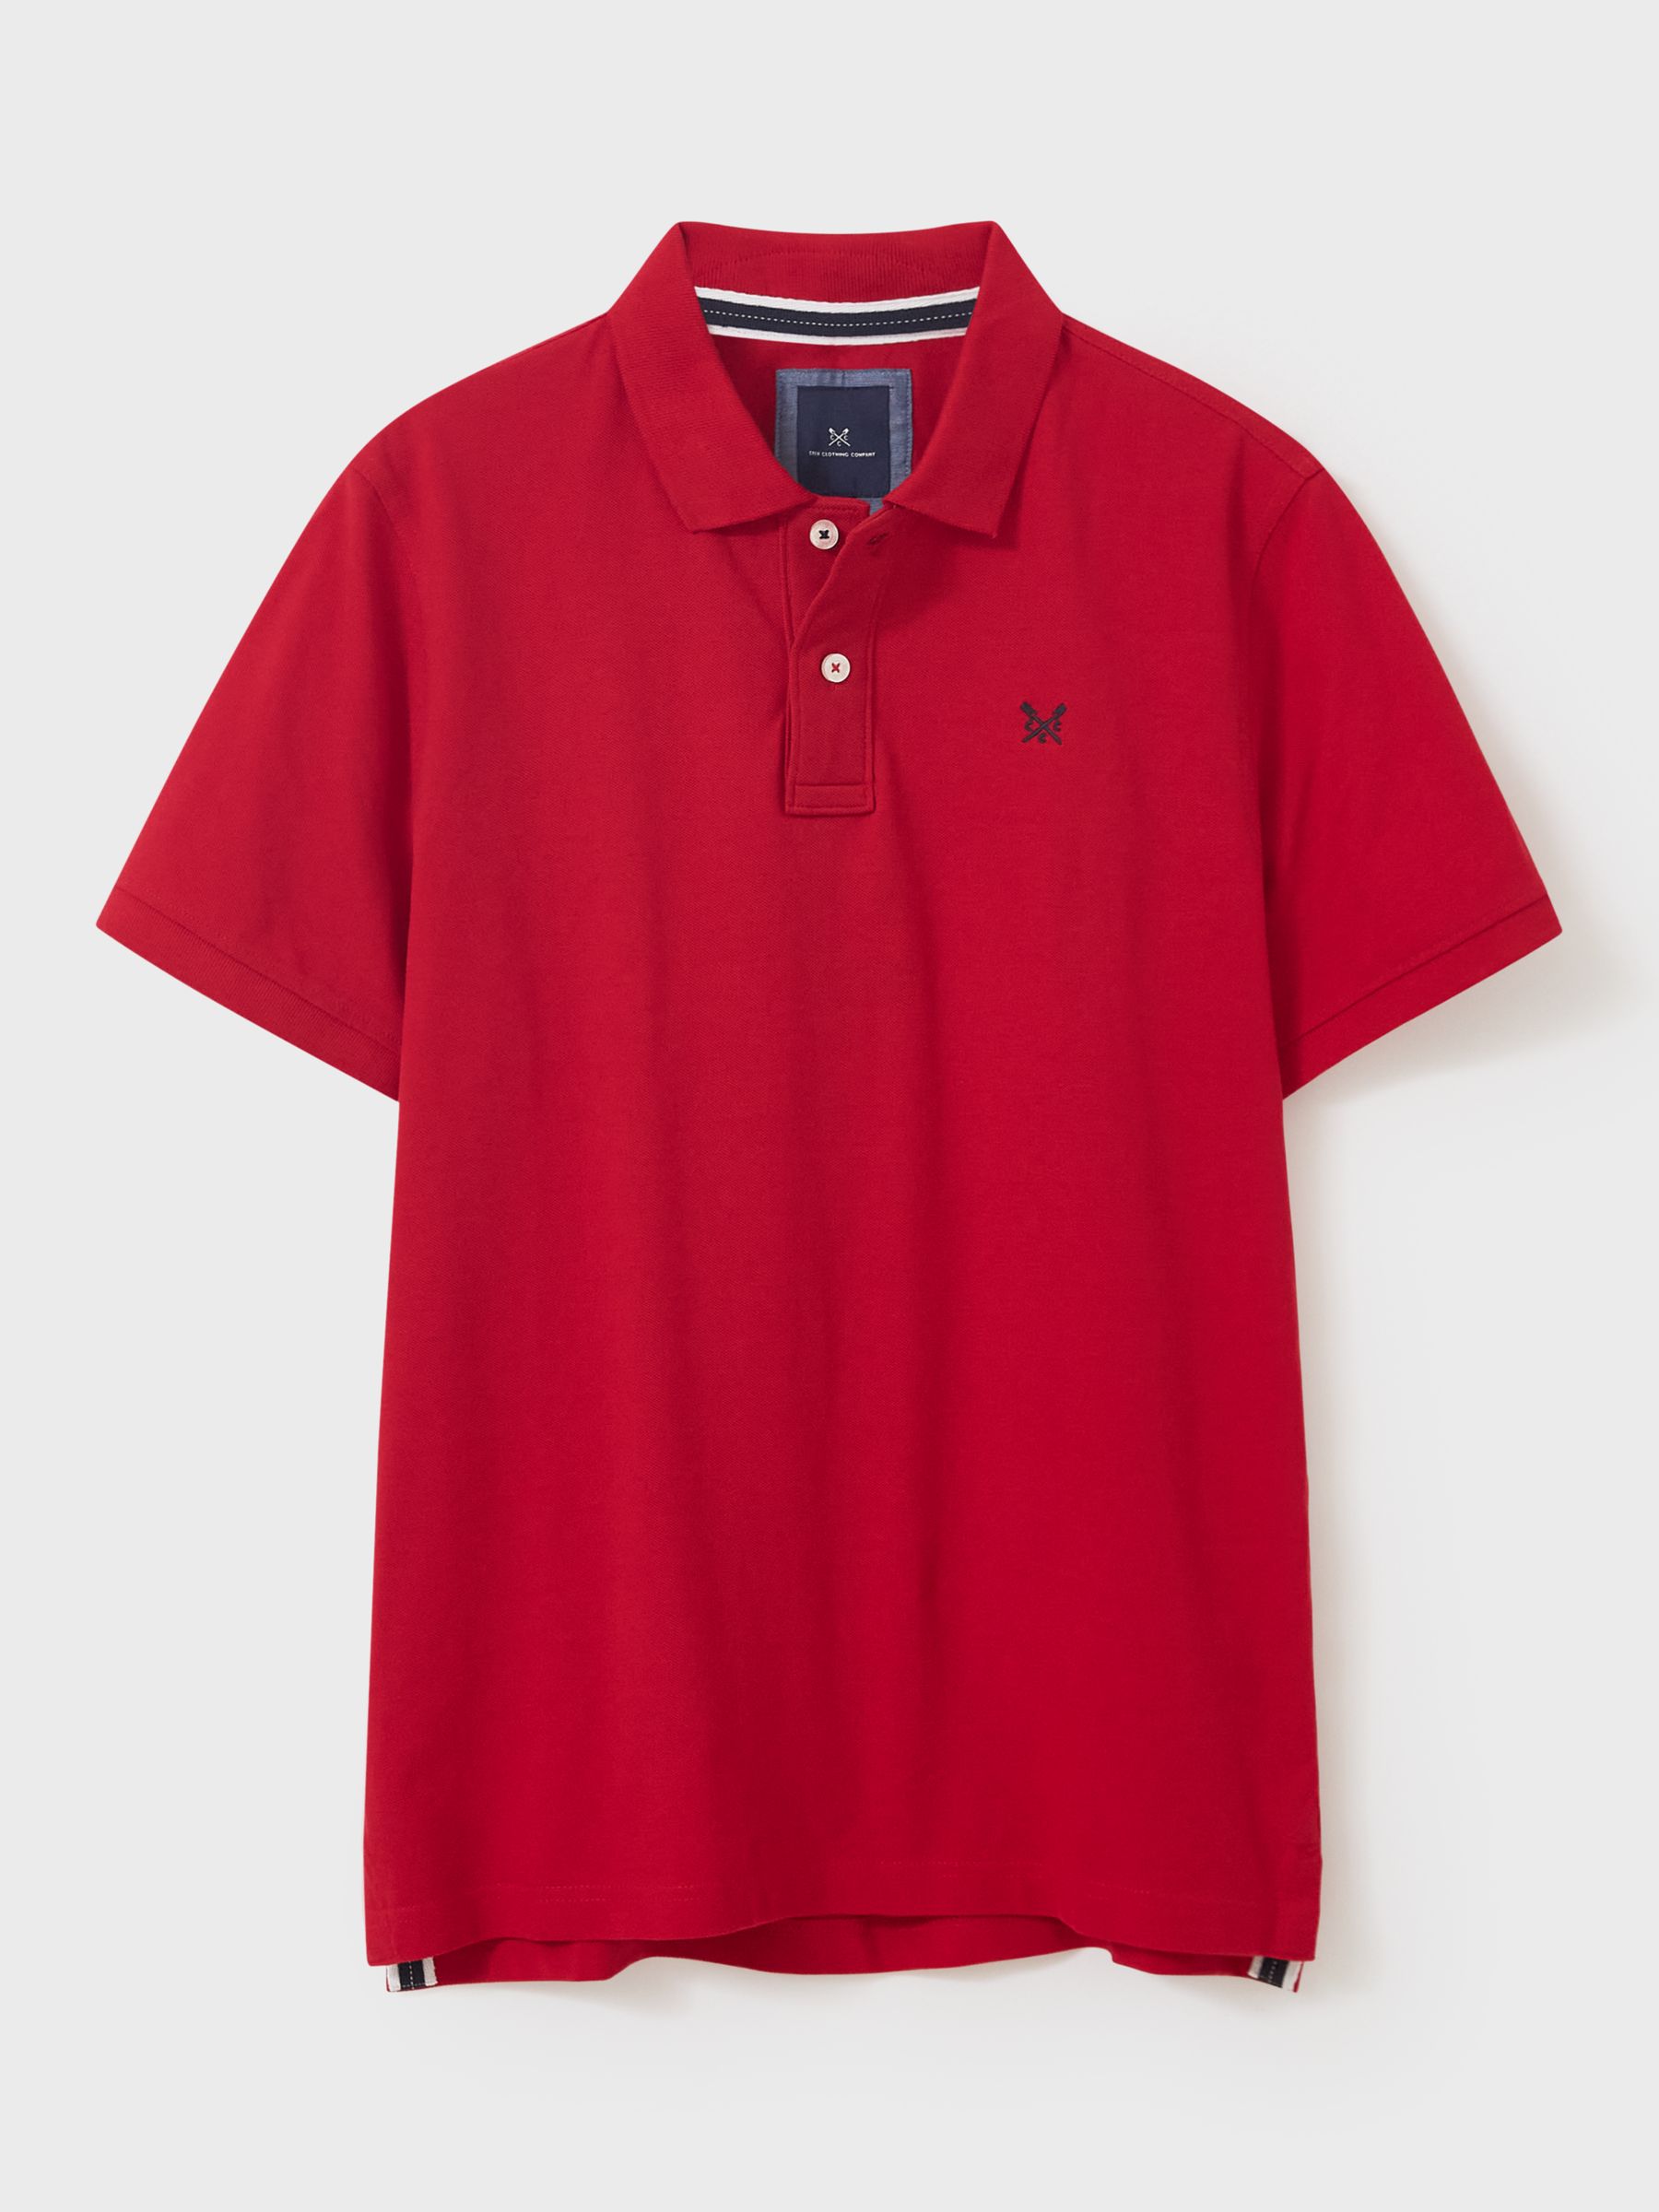 Crew Clothing Classic Pique Cotton Polo Shirt, Crimson Red, L